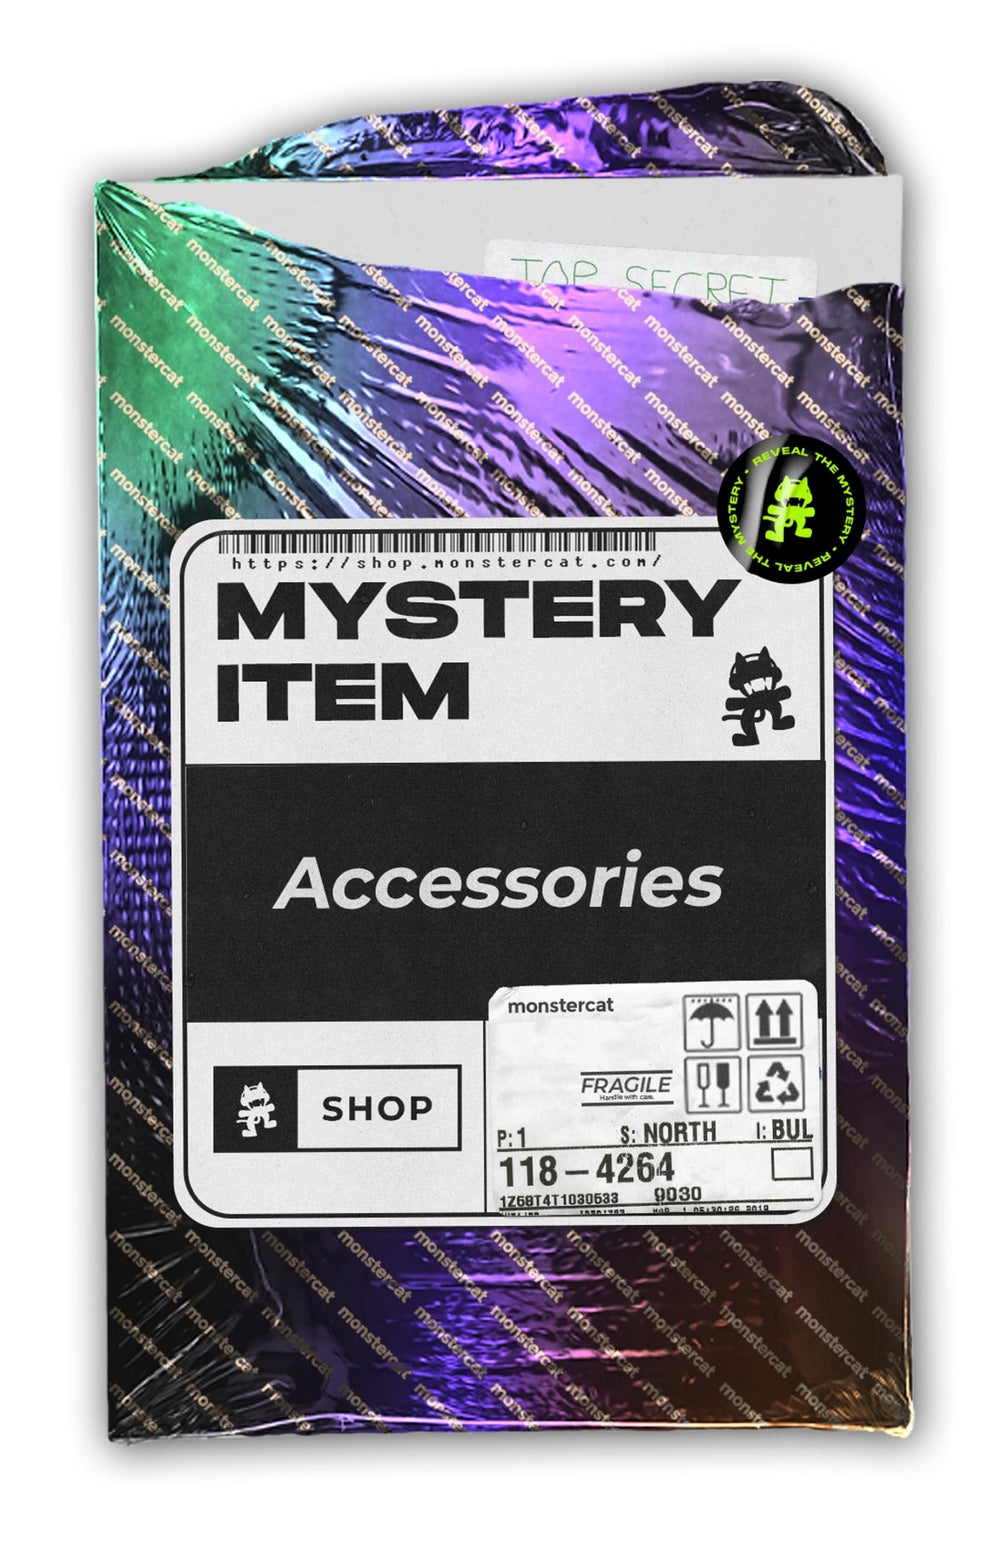 Mystery Accessory Item